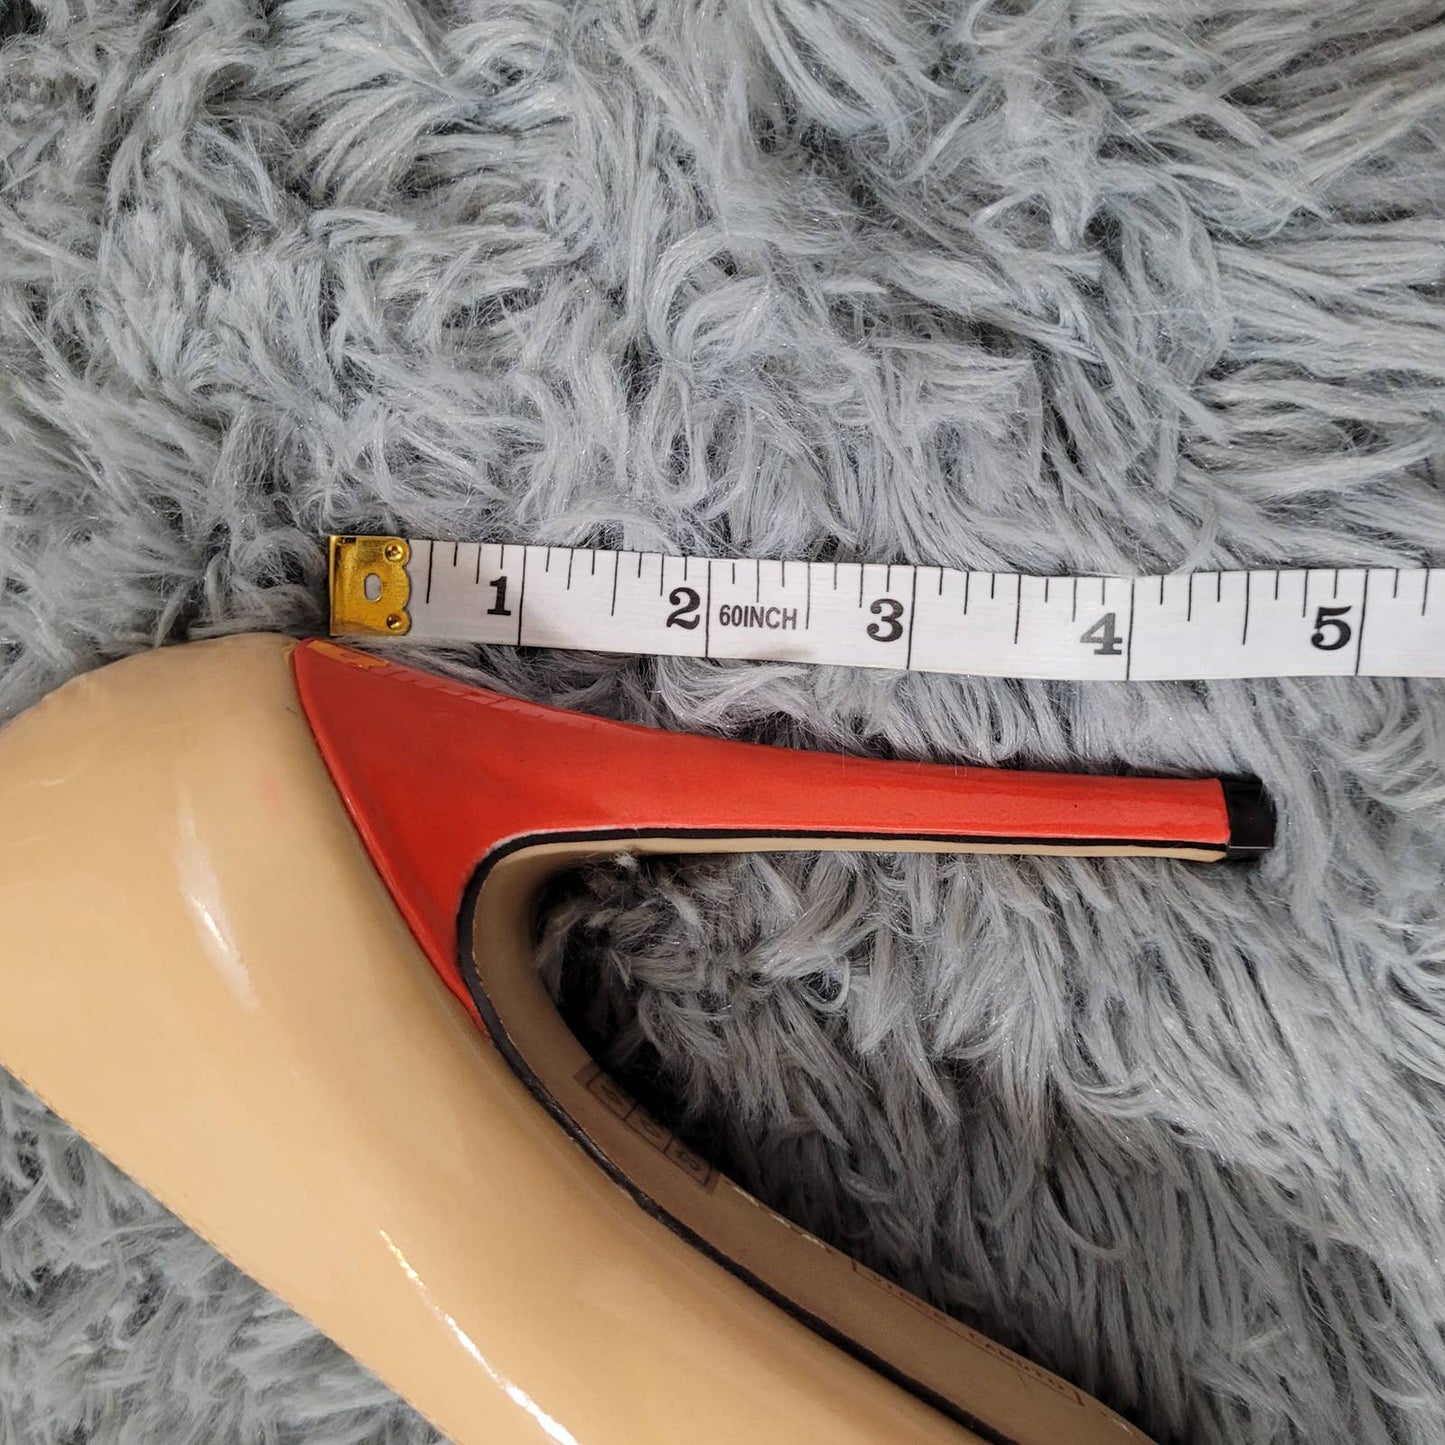 Vince Camuto Deric Heels Beige Patent Leather with Orange Stiletto - Size 6Markita's ClosetVince Camuto